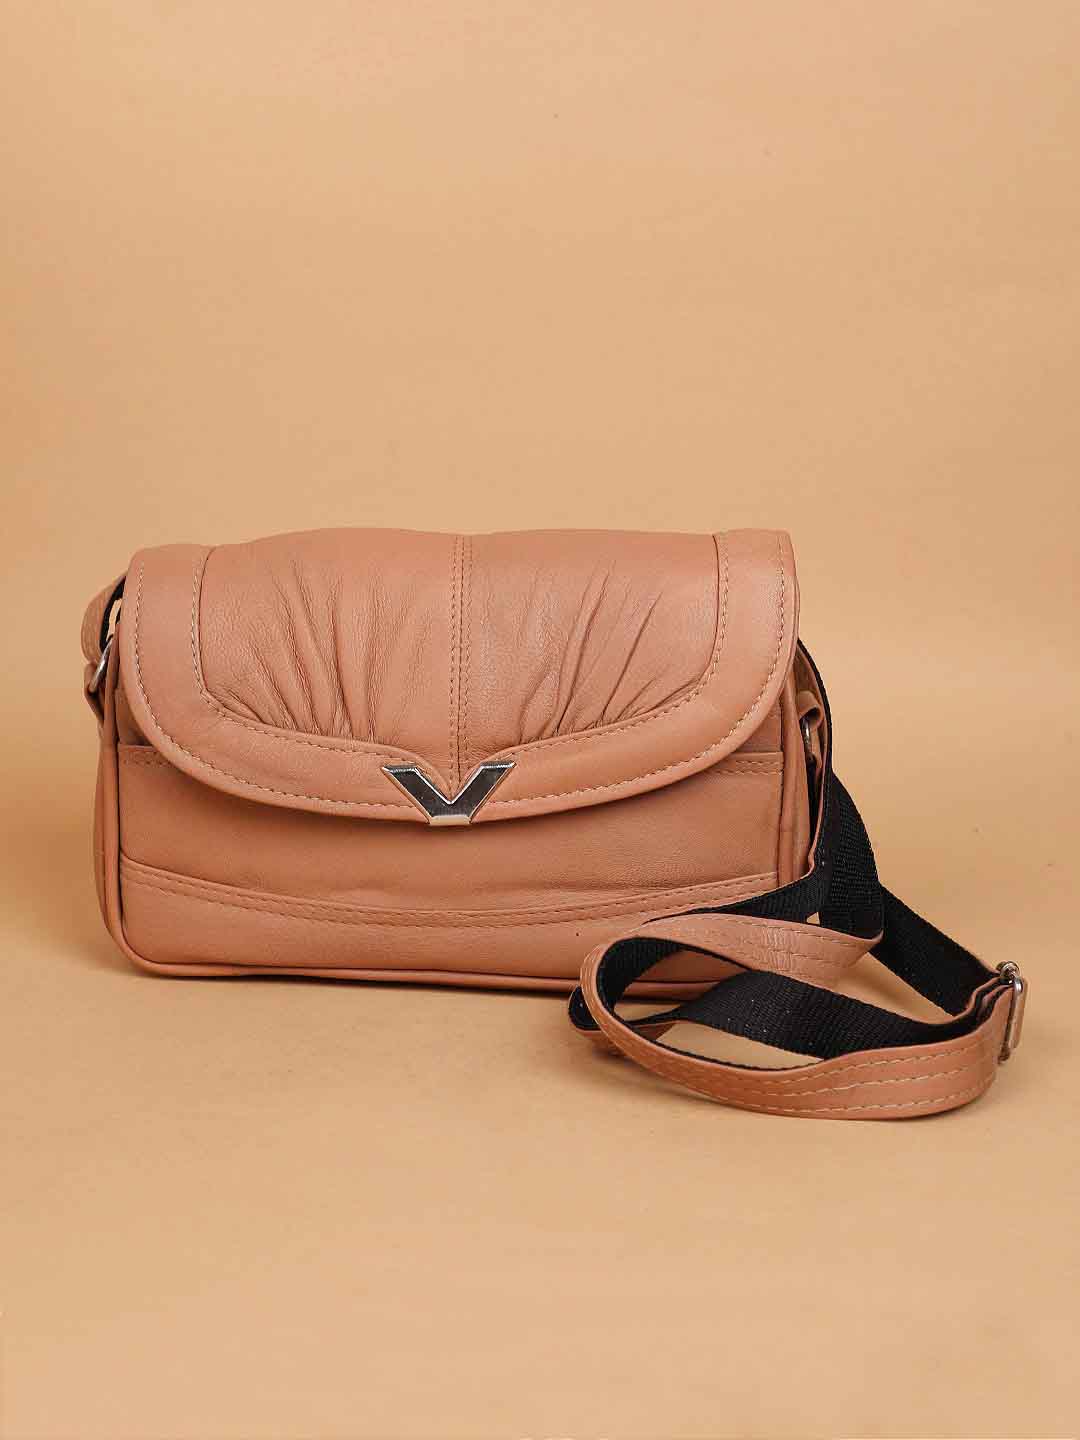 PERFECT CHOICE Orange Sling Bag PU Leather Sling bag for women ladies side  bag women sling bag Peach  Price in India  Flipkartcom